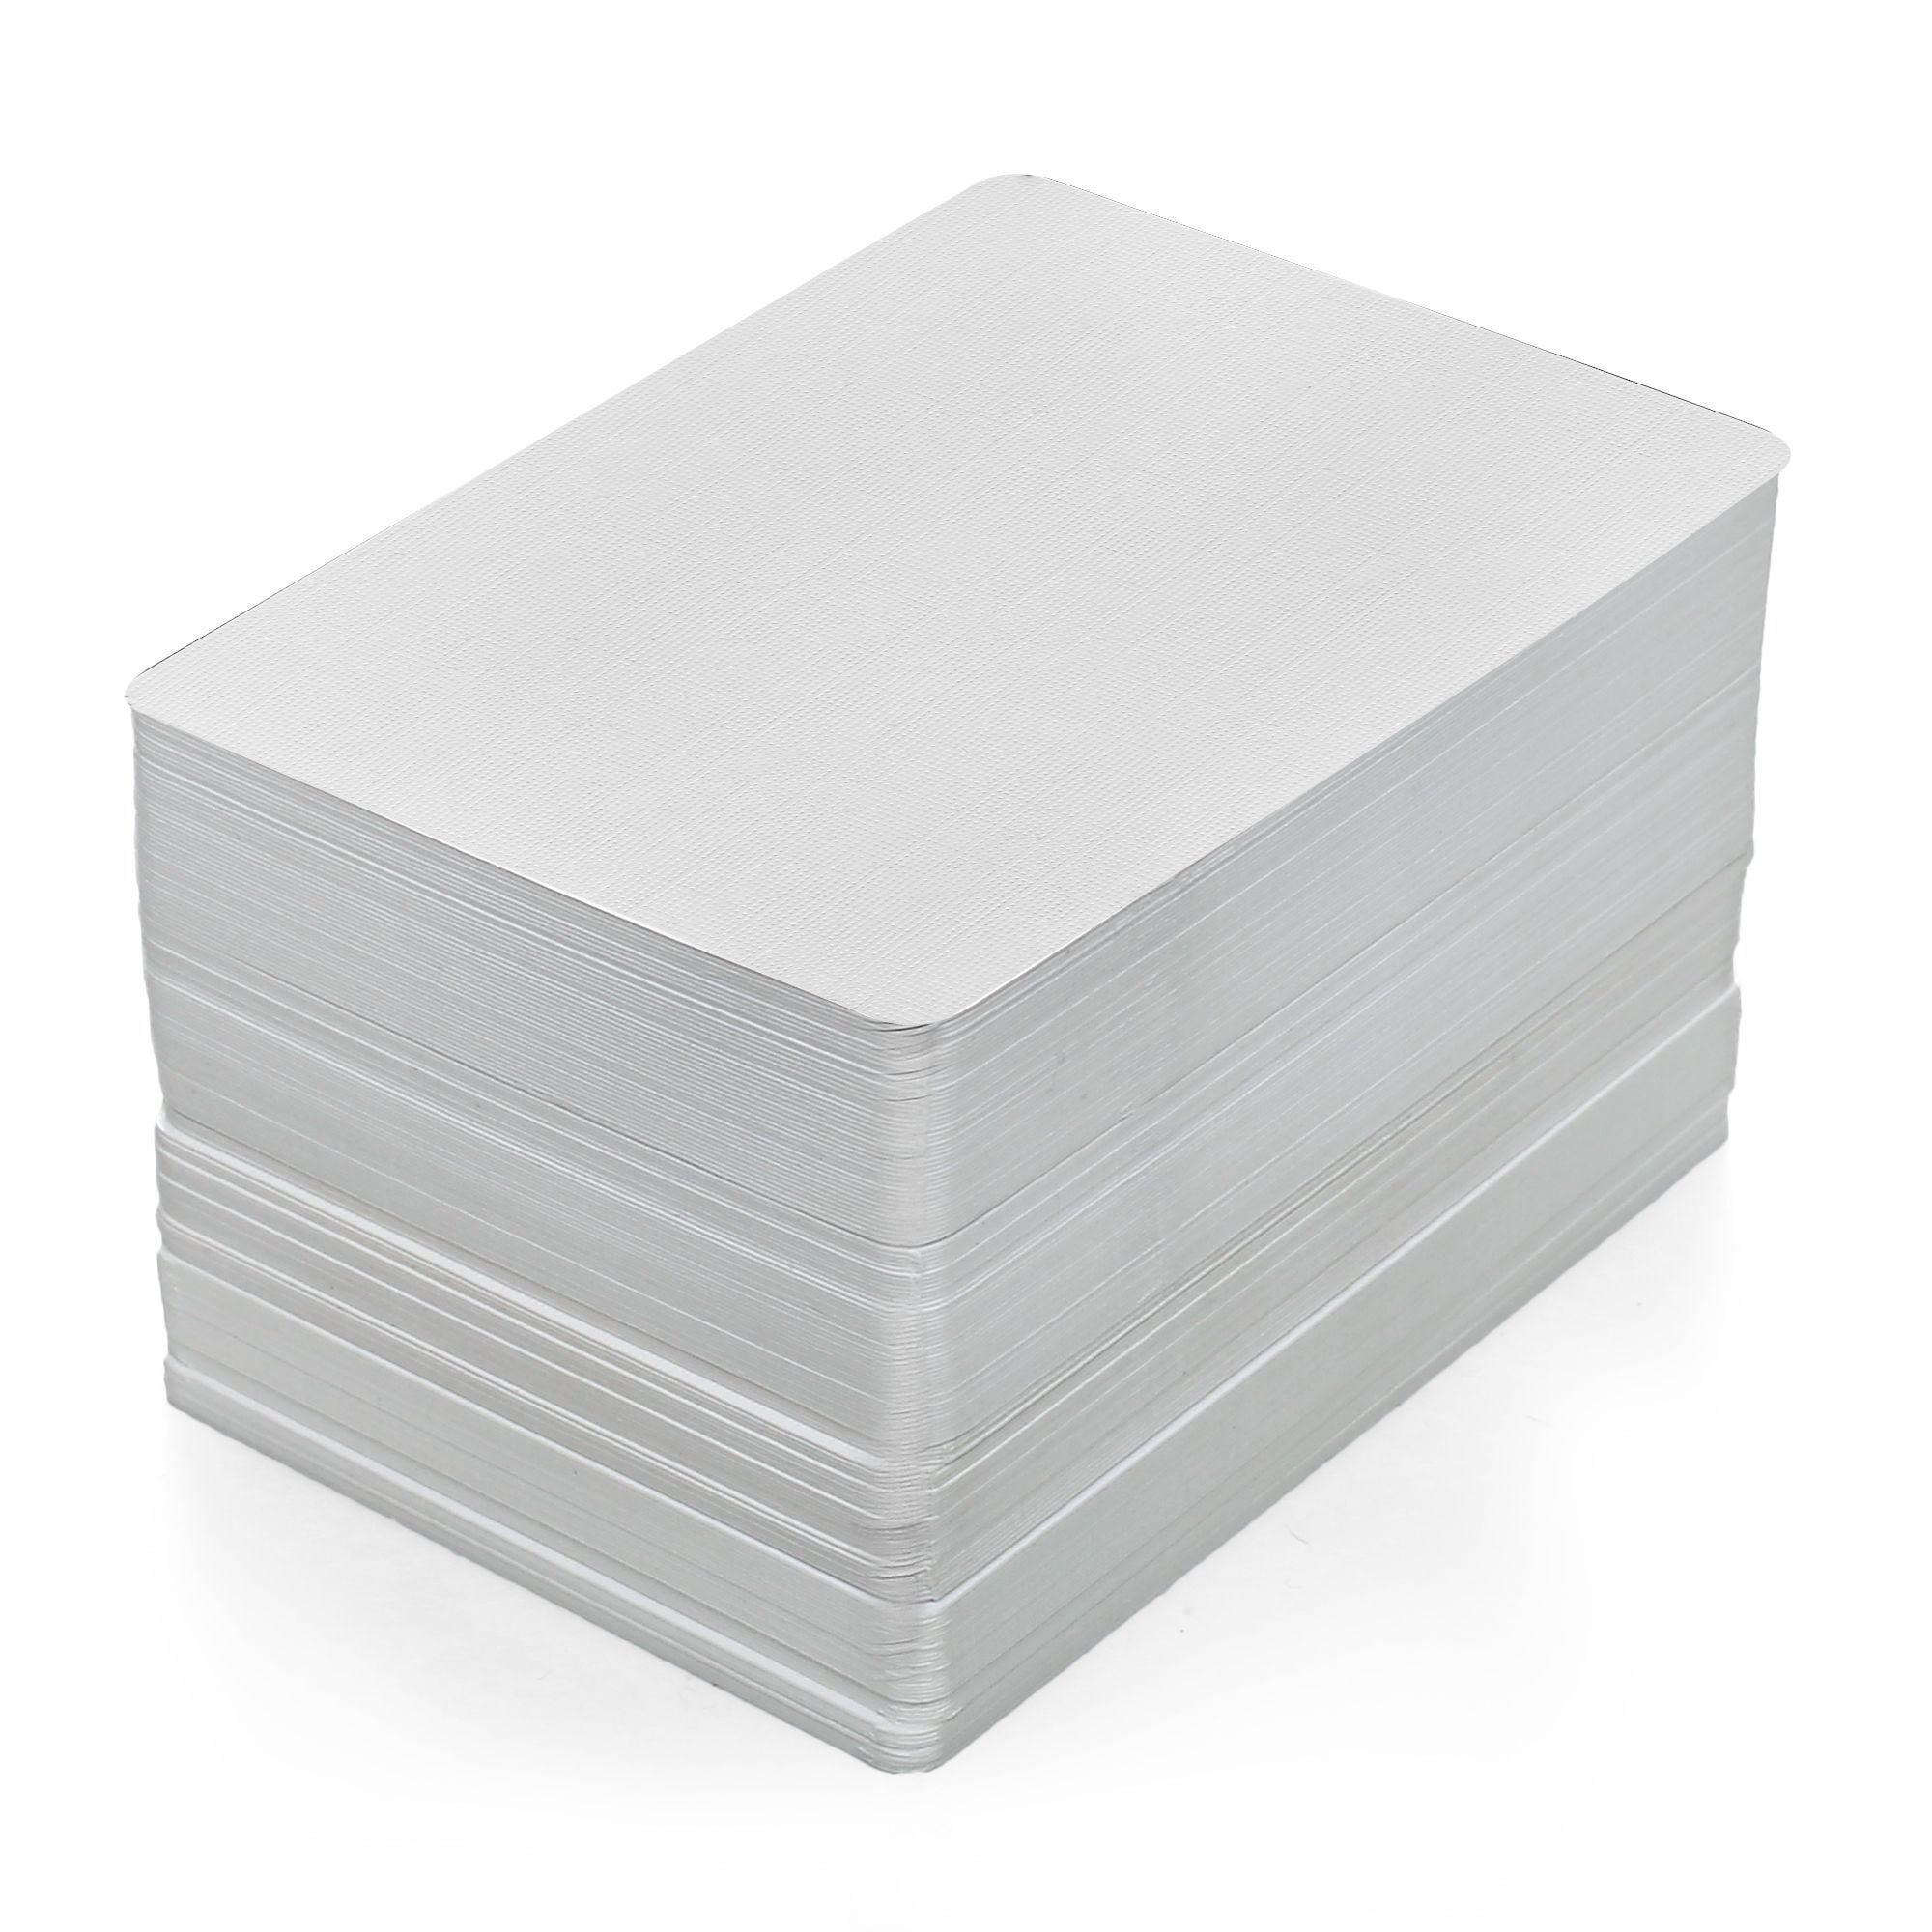 30 Pcs Game Card Cardboard Blank White Cards Stocks White Fixing